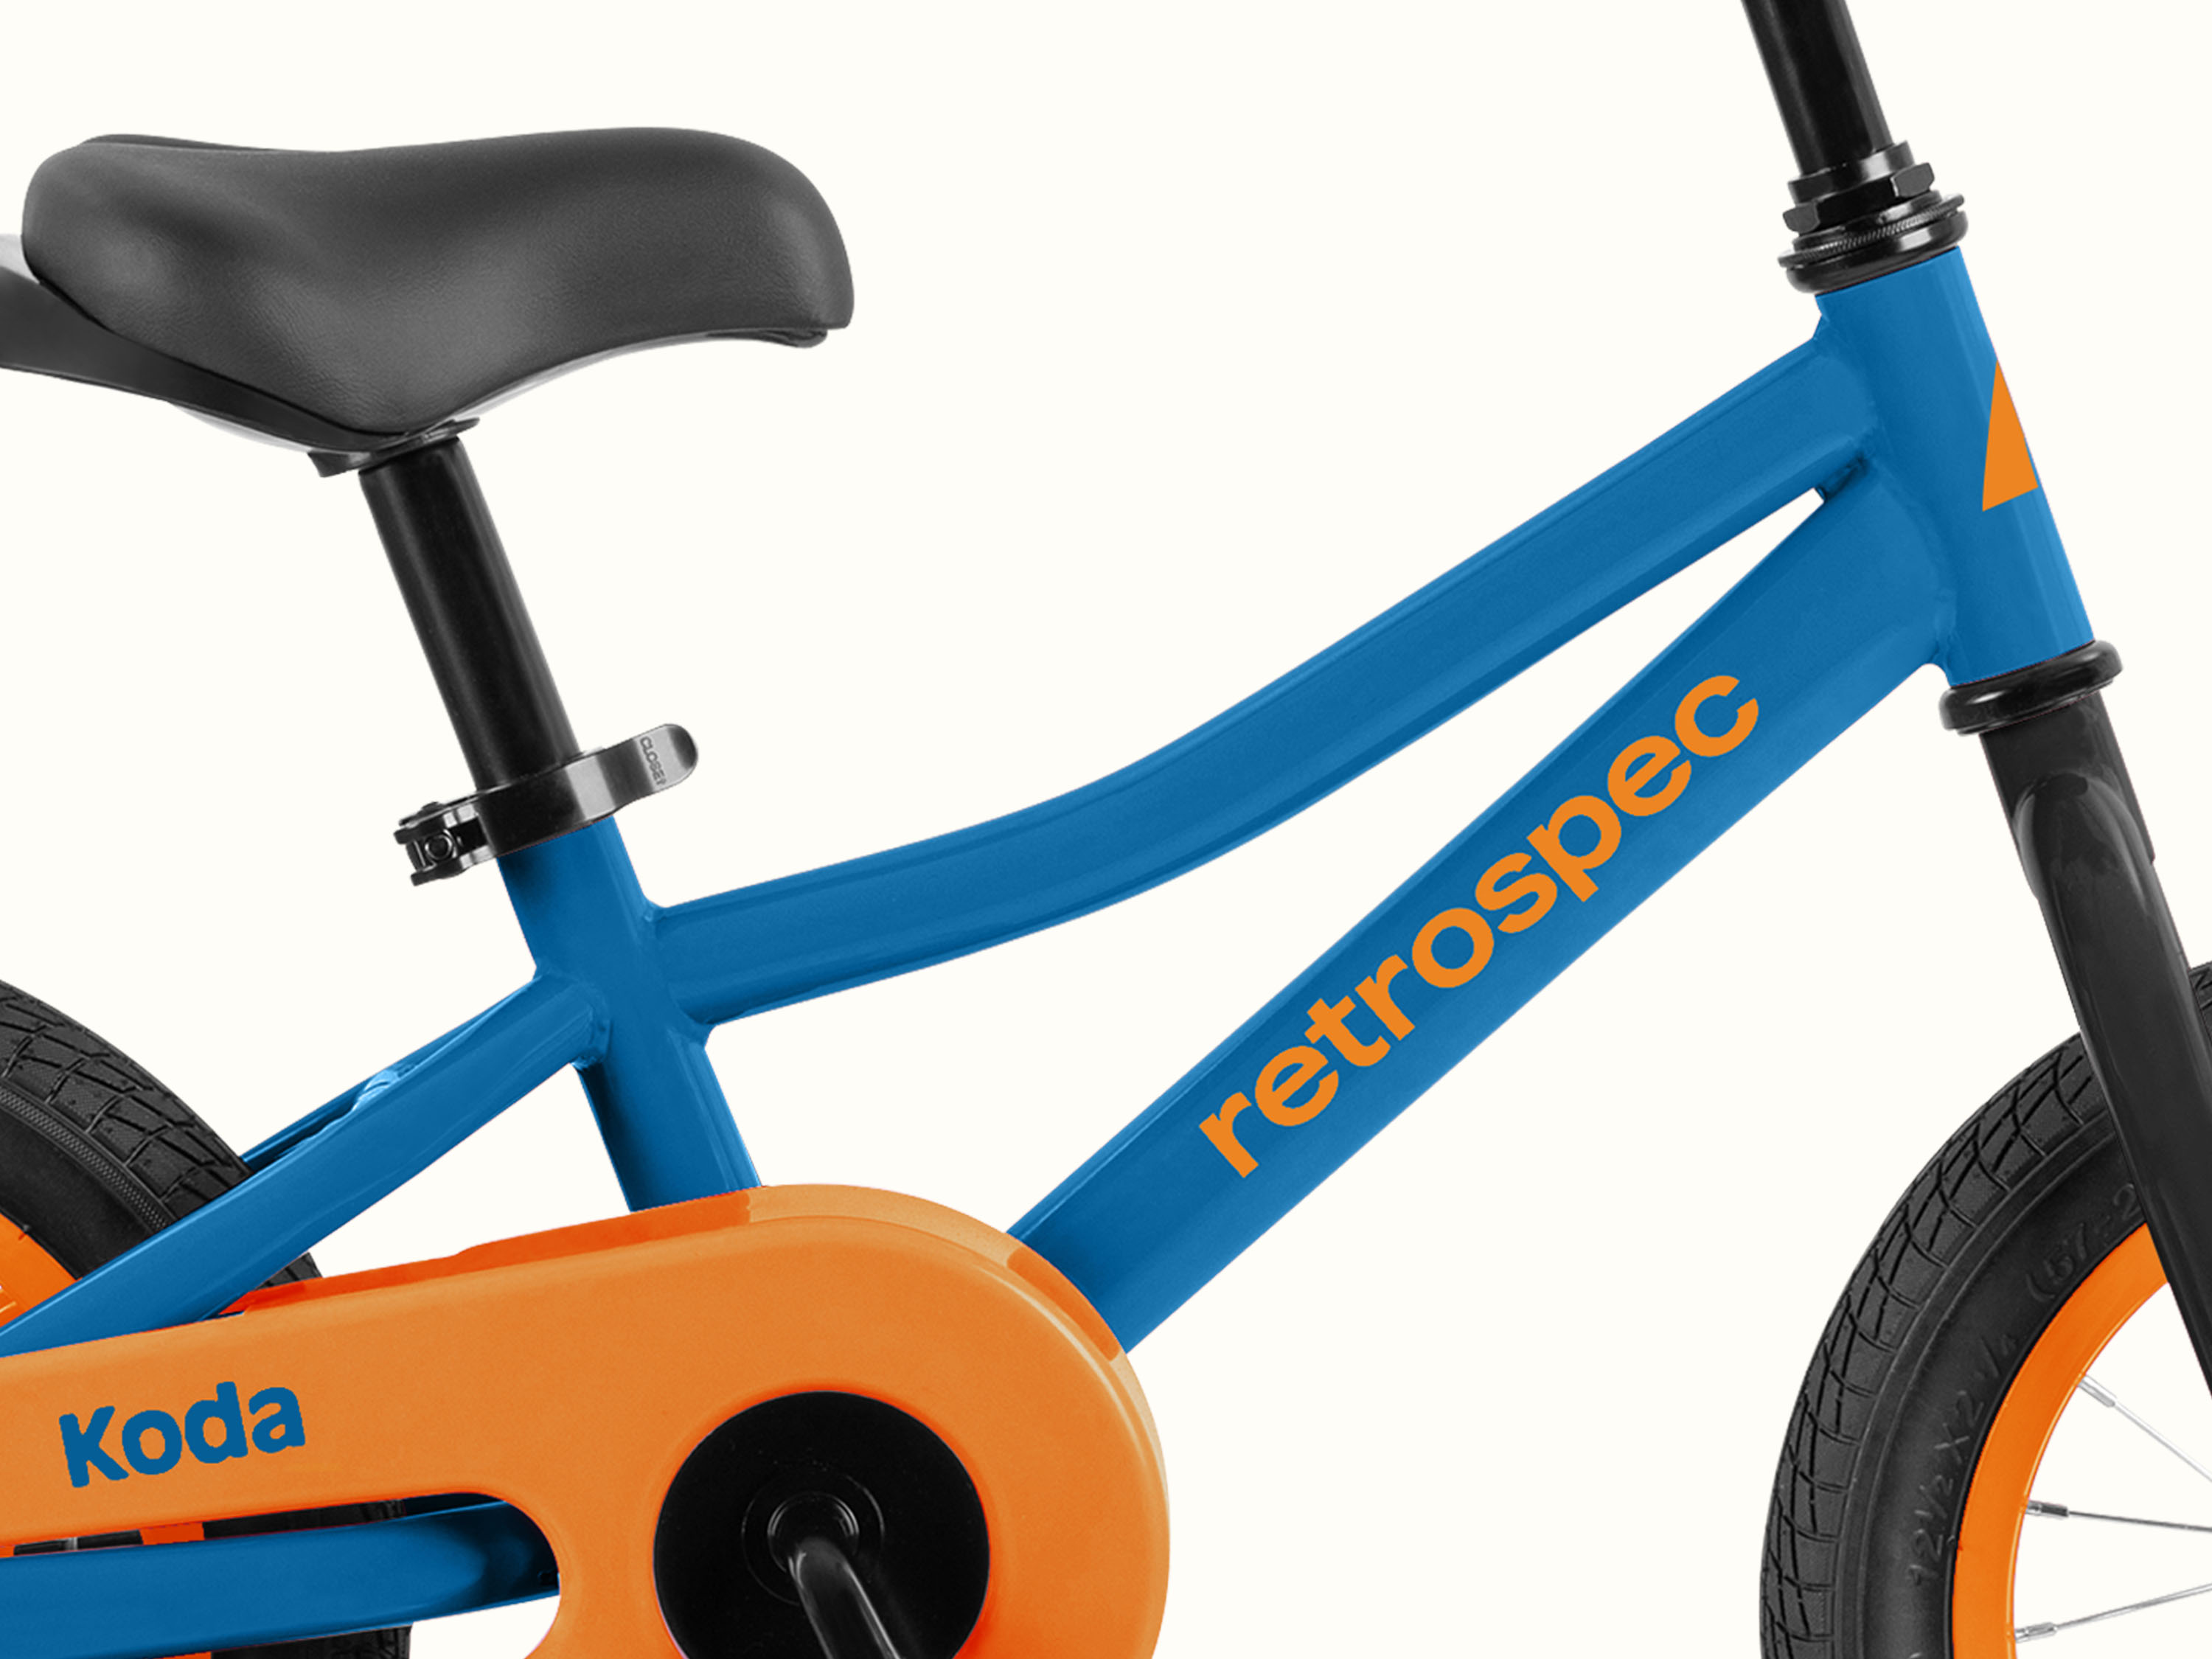 Koda 2 12” Kids' Bike (3-4 years)